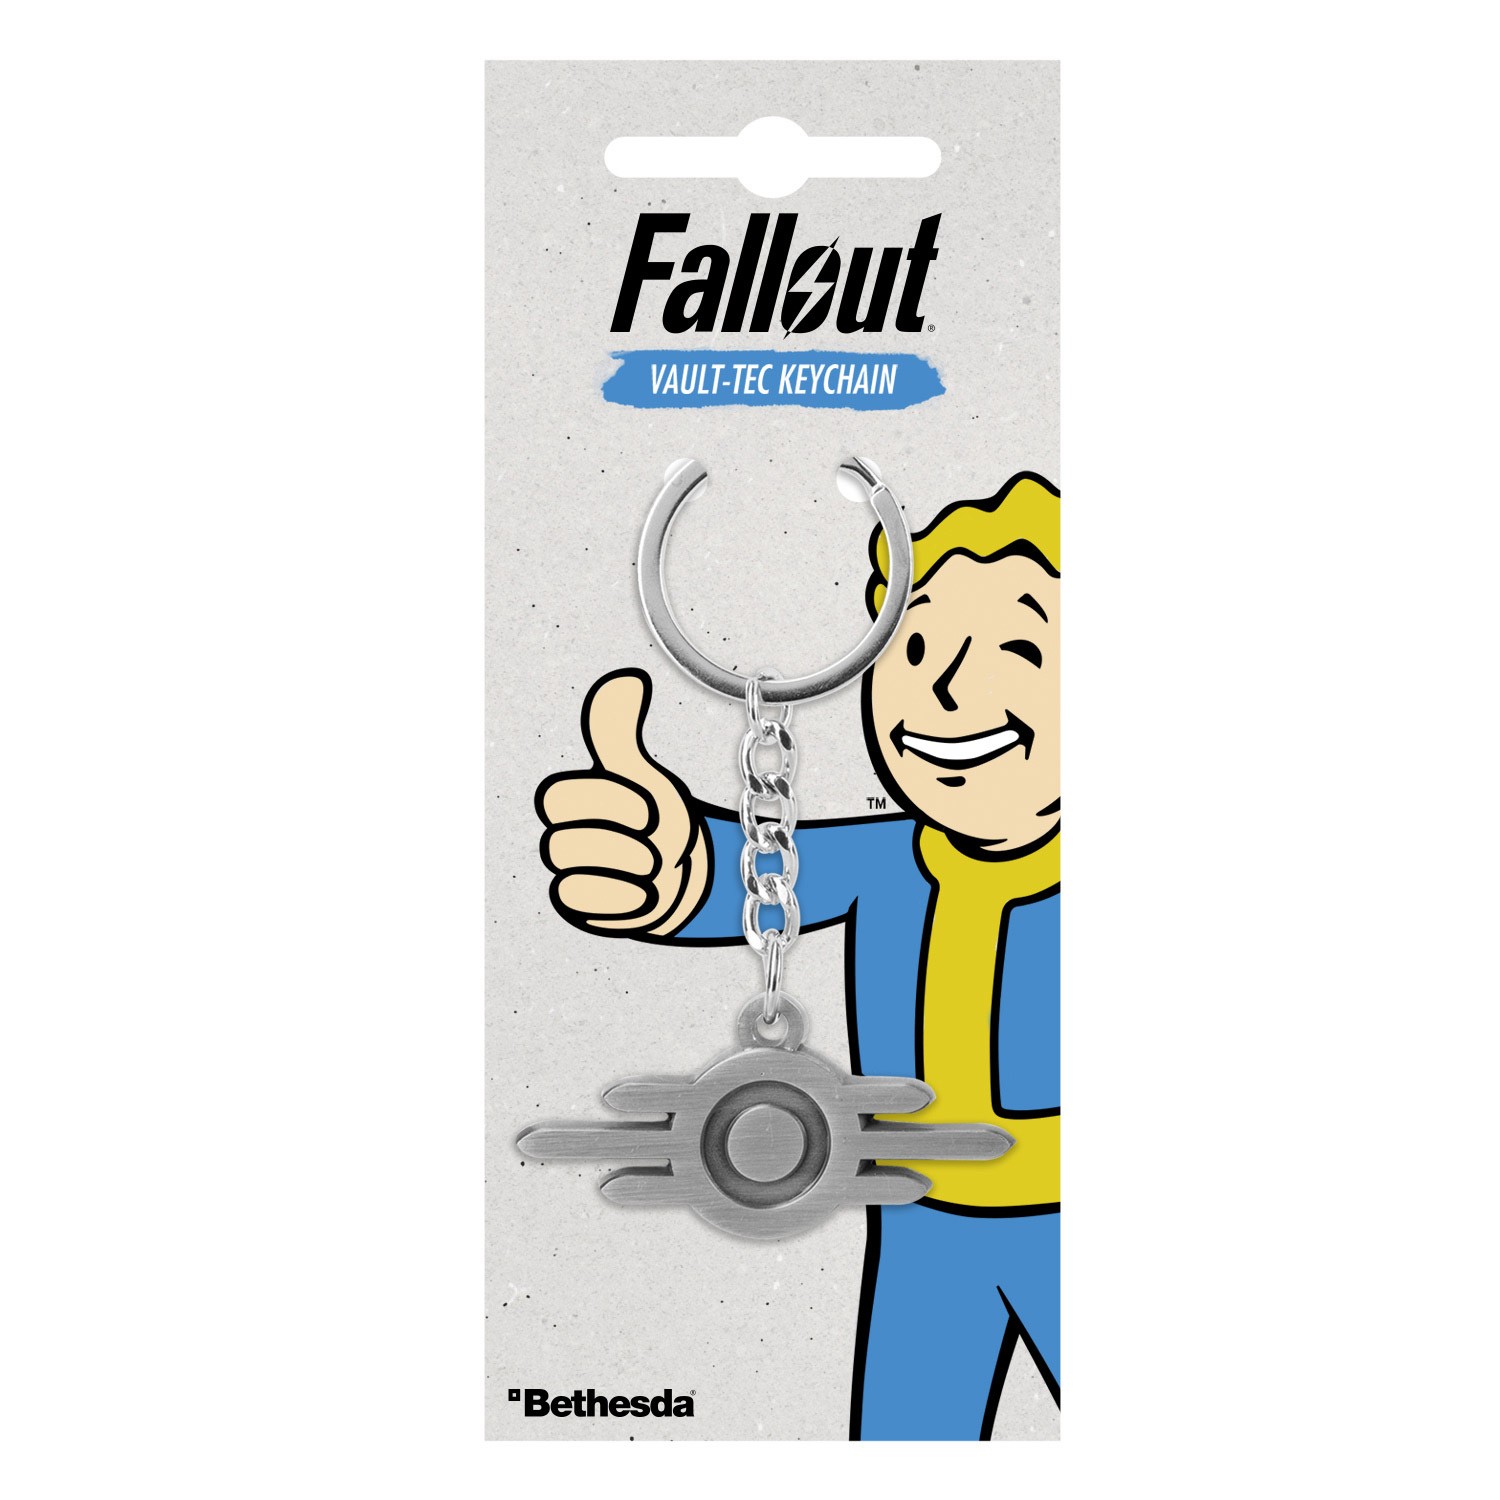 Fallout "Vault-Tec" raktų pakabukas